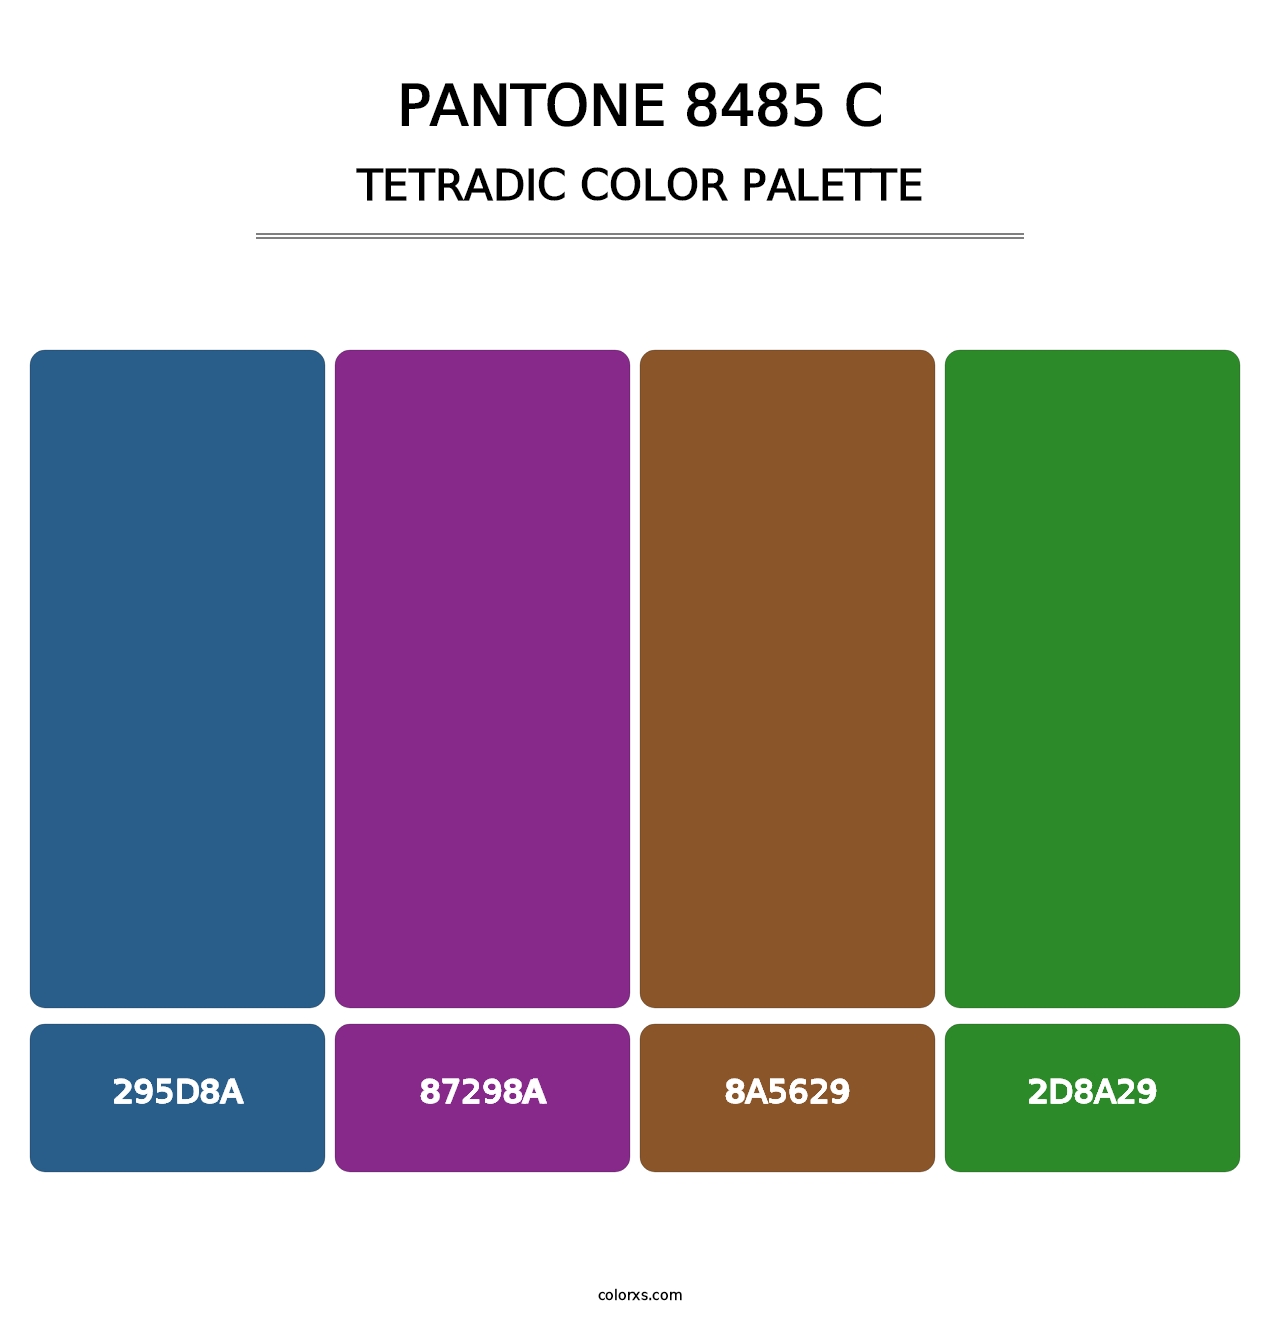 PANTONE 8485 C - Tetradic Color Palette